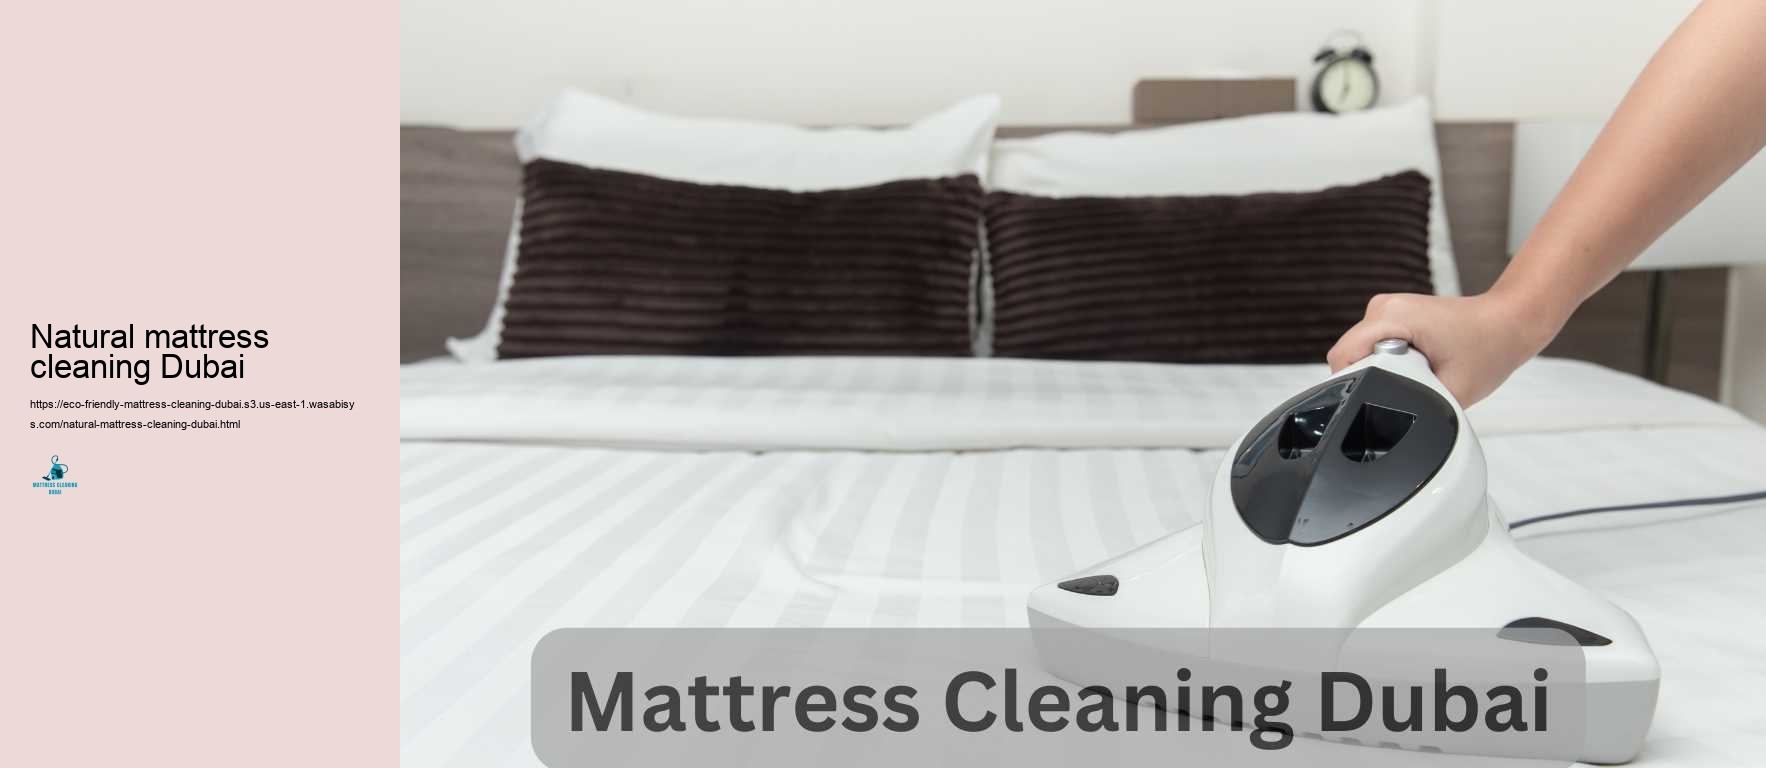 Natural mattress cleaning Dubai